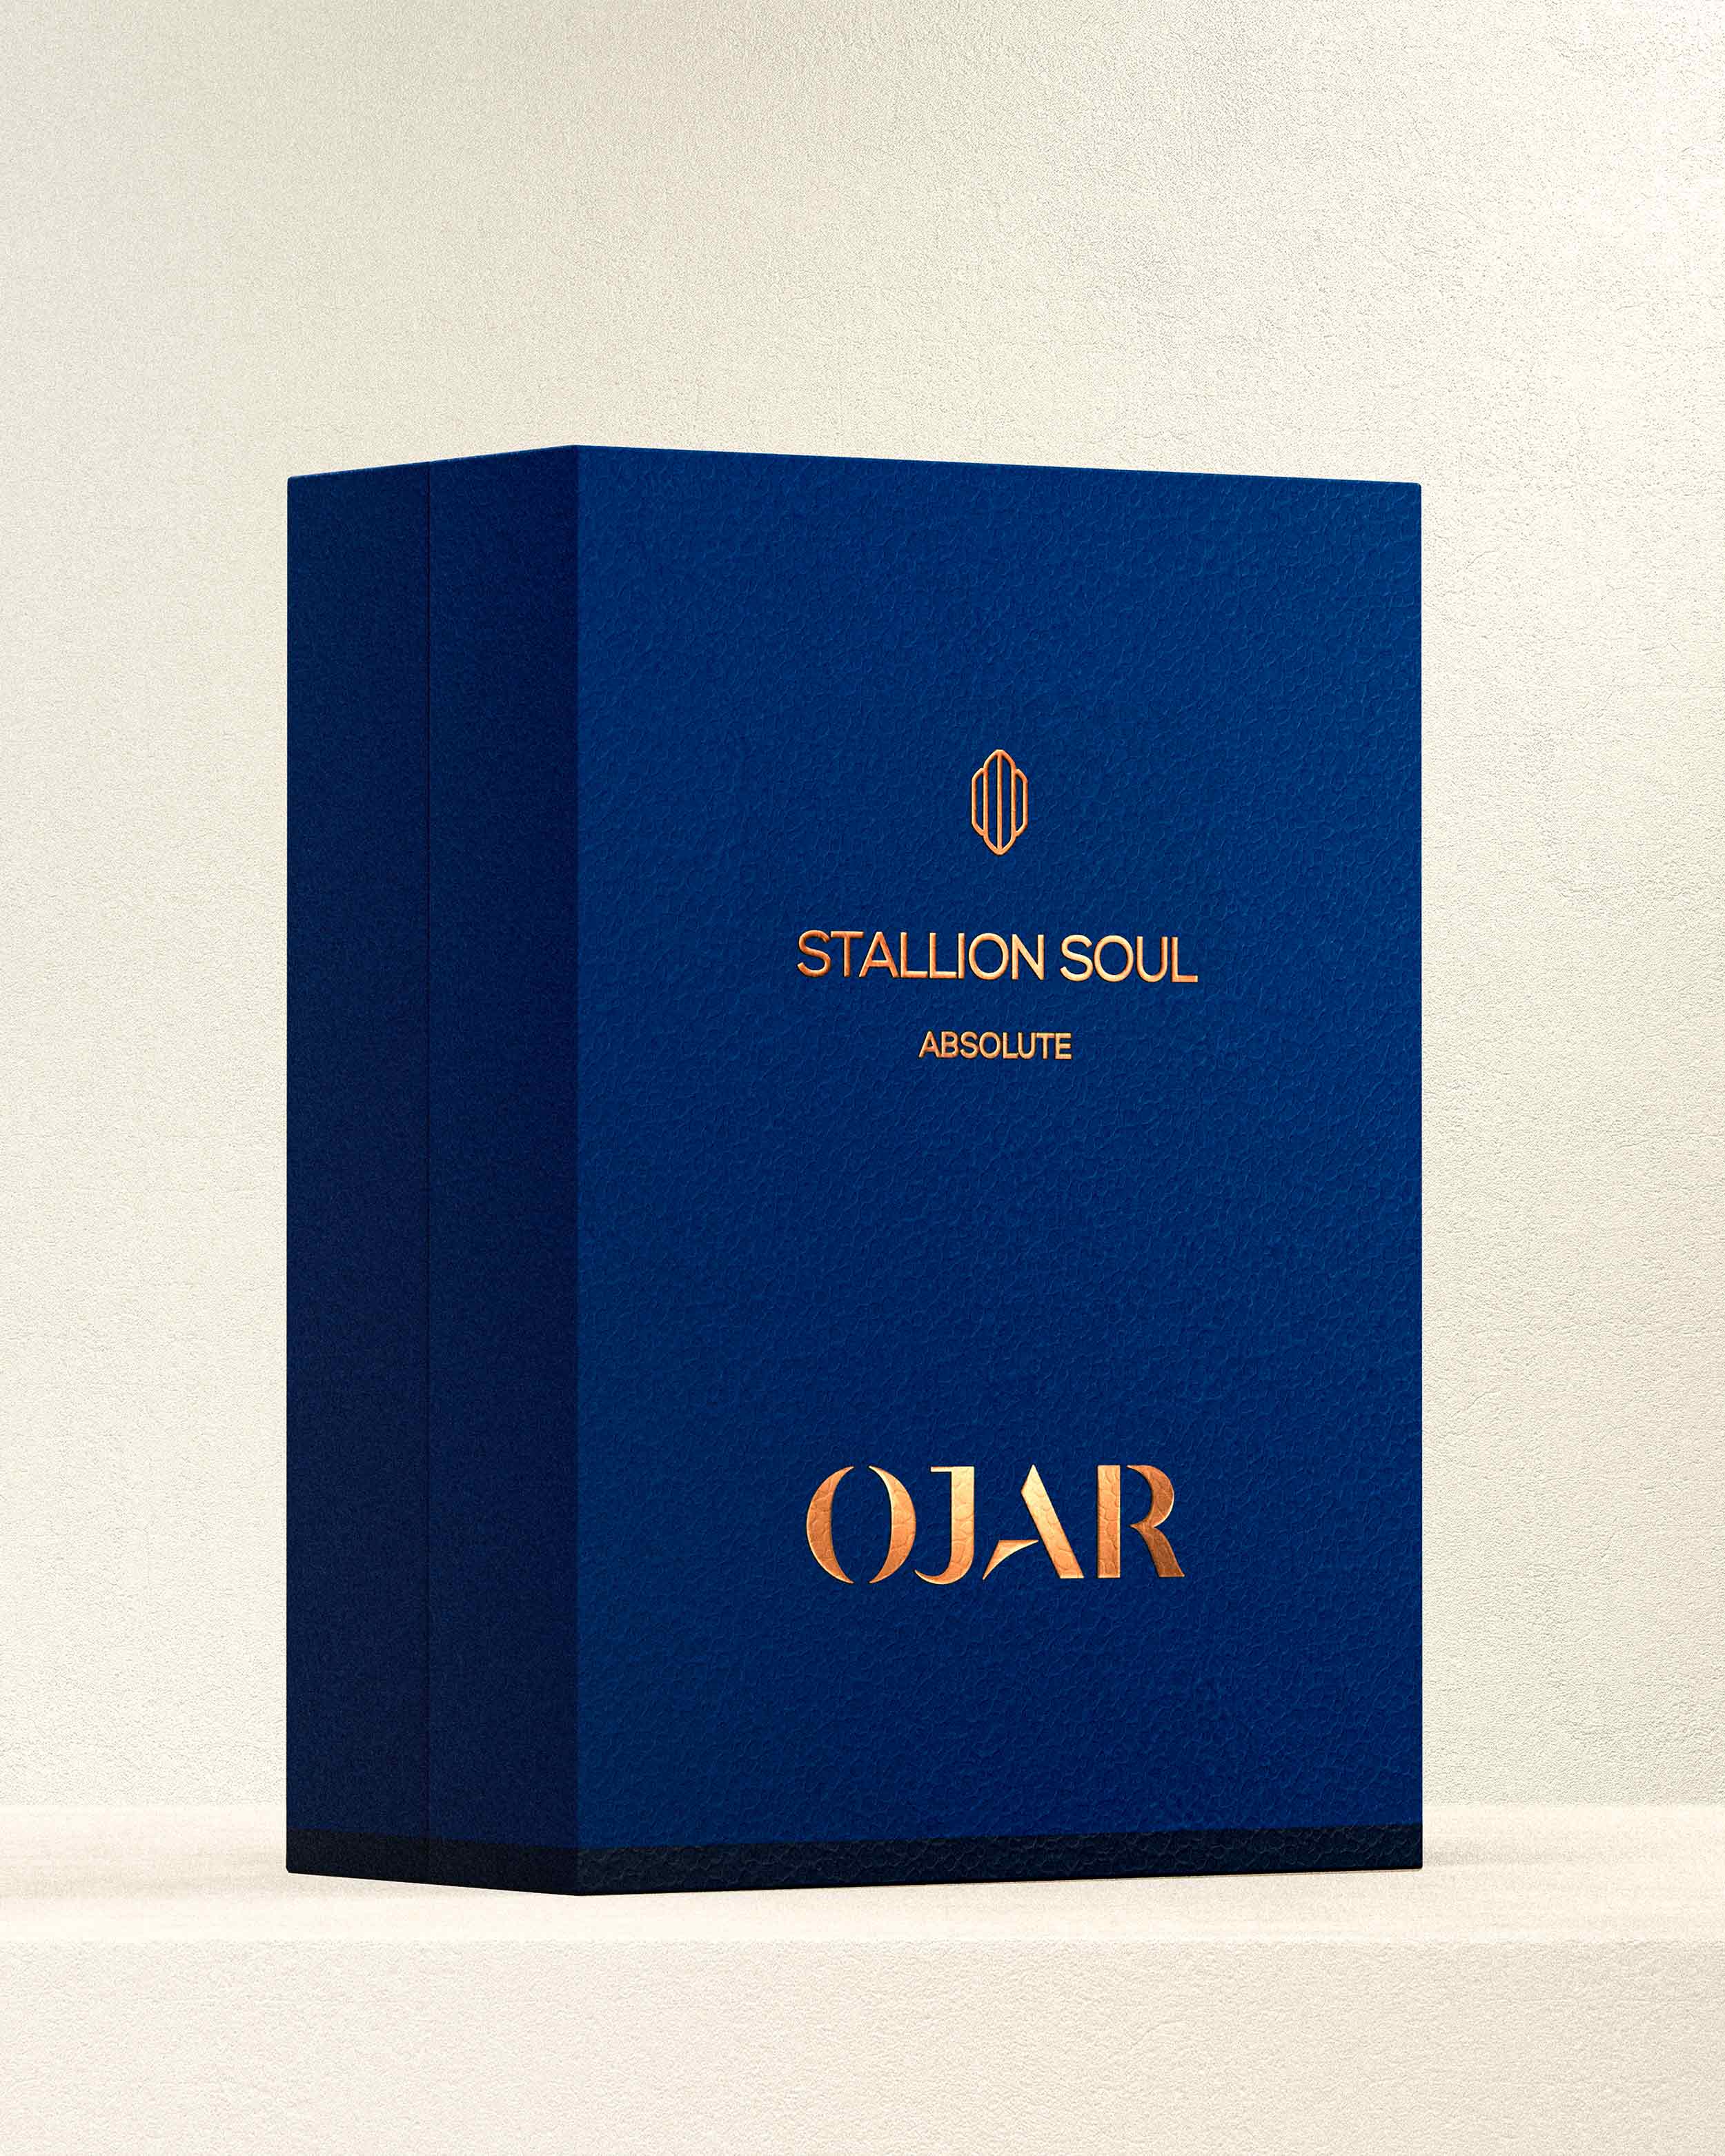 OJAR Absolute Stallion Soul Perfume Pack